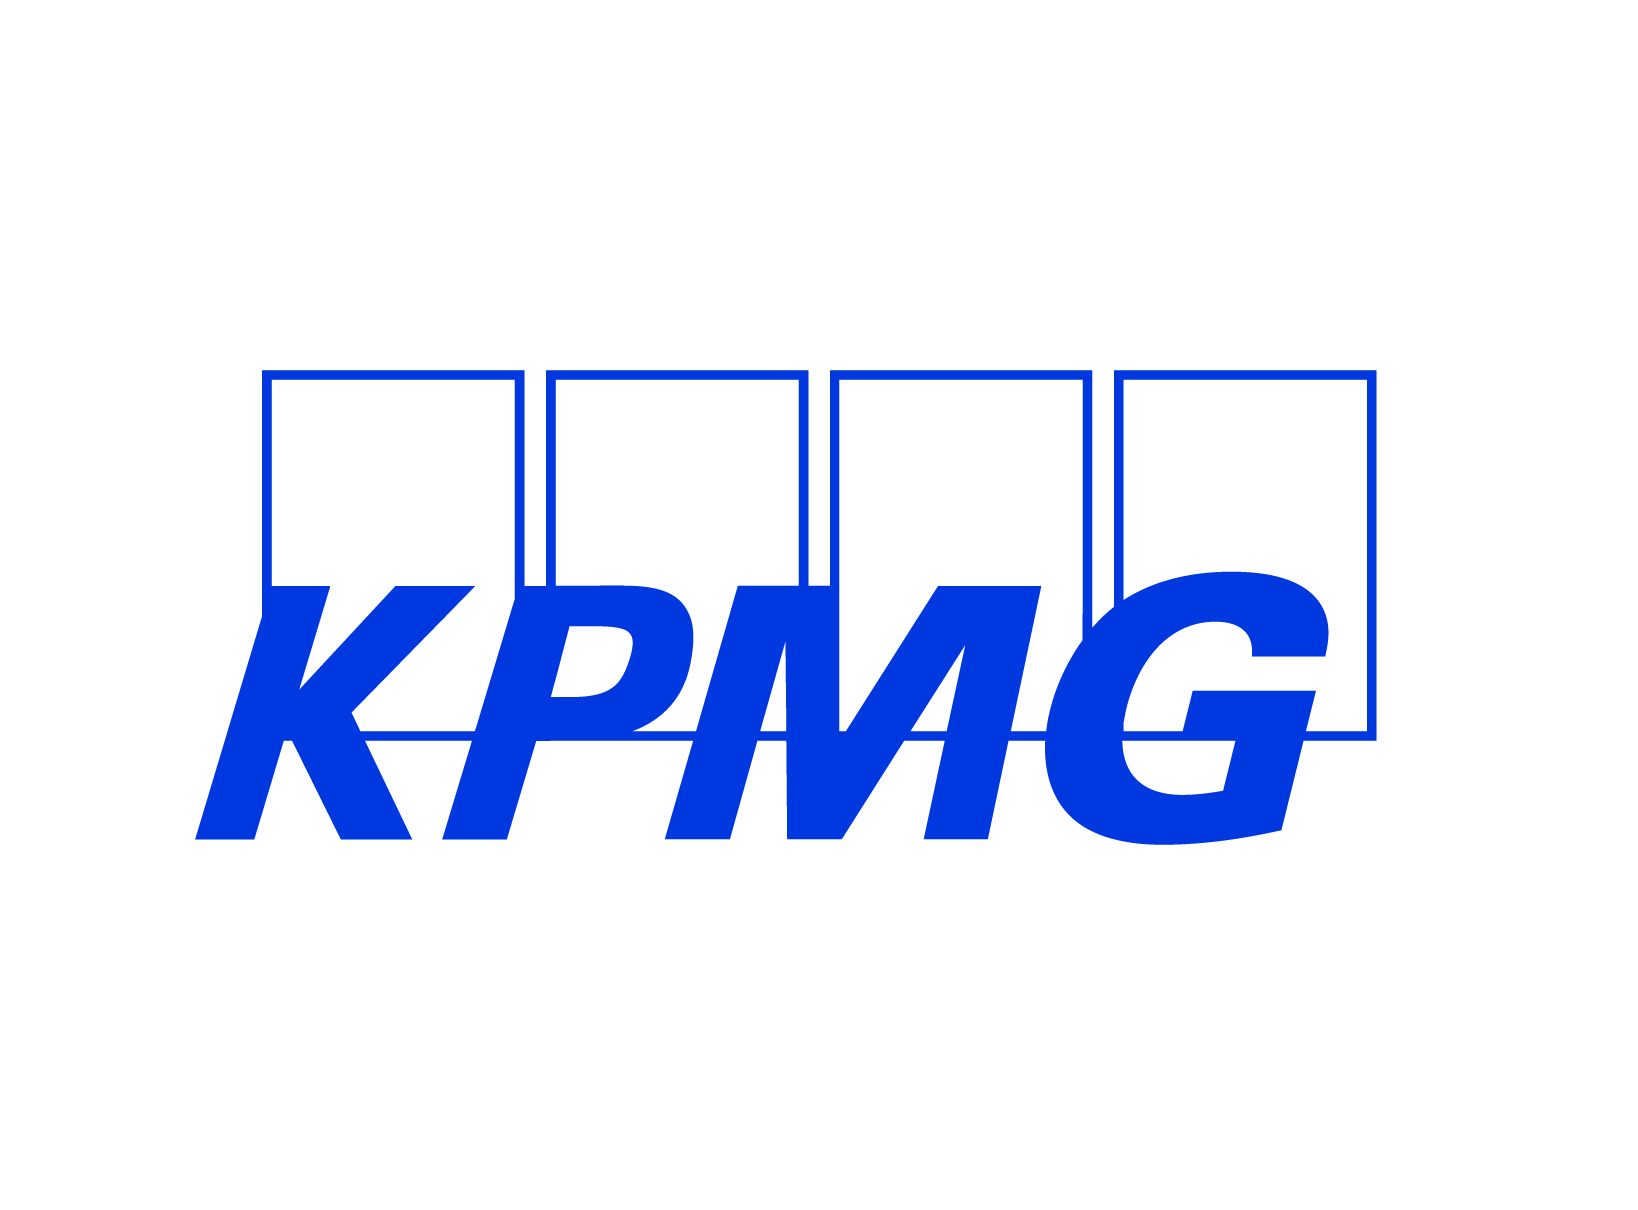 K. KPMG (Pintar la ciudad de púrpura)